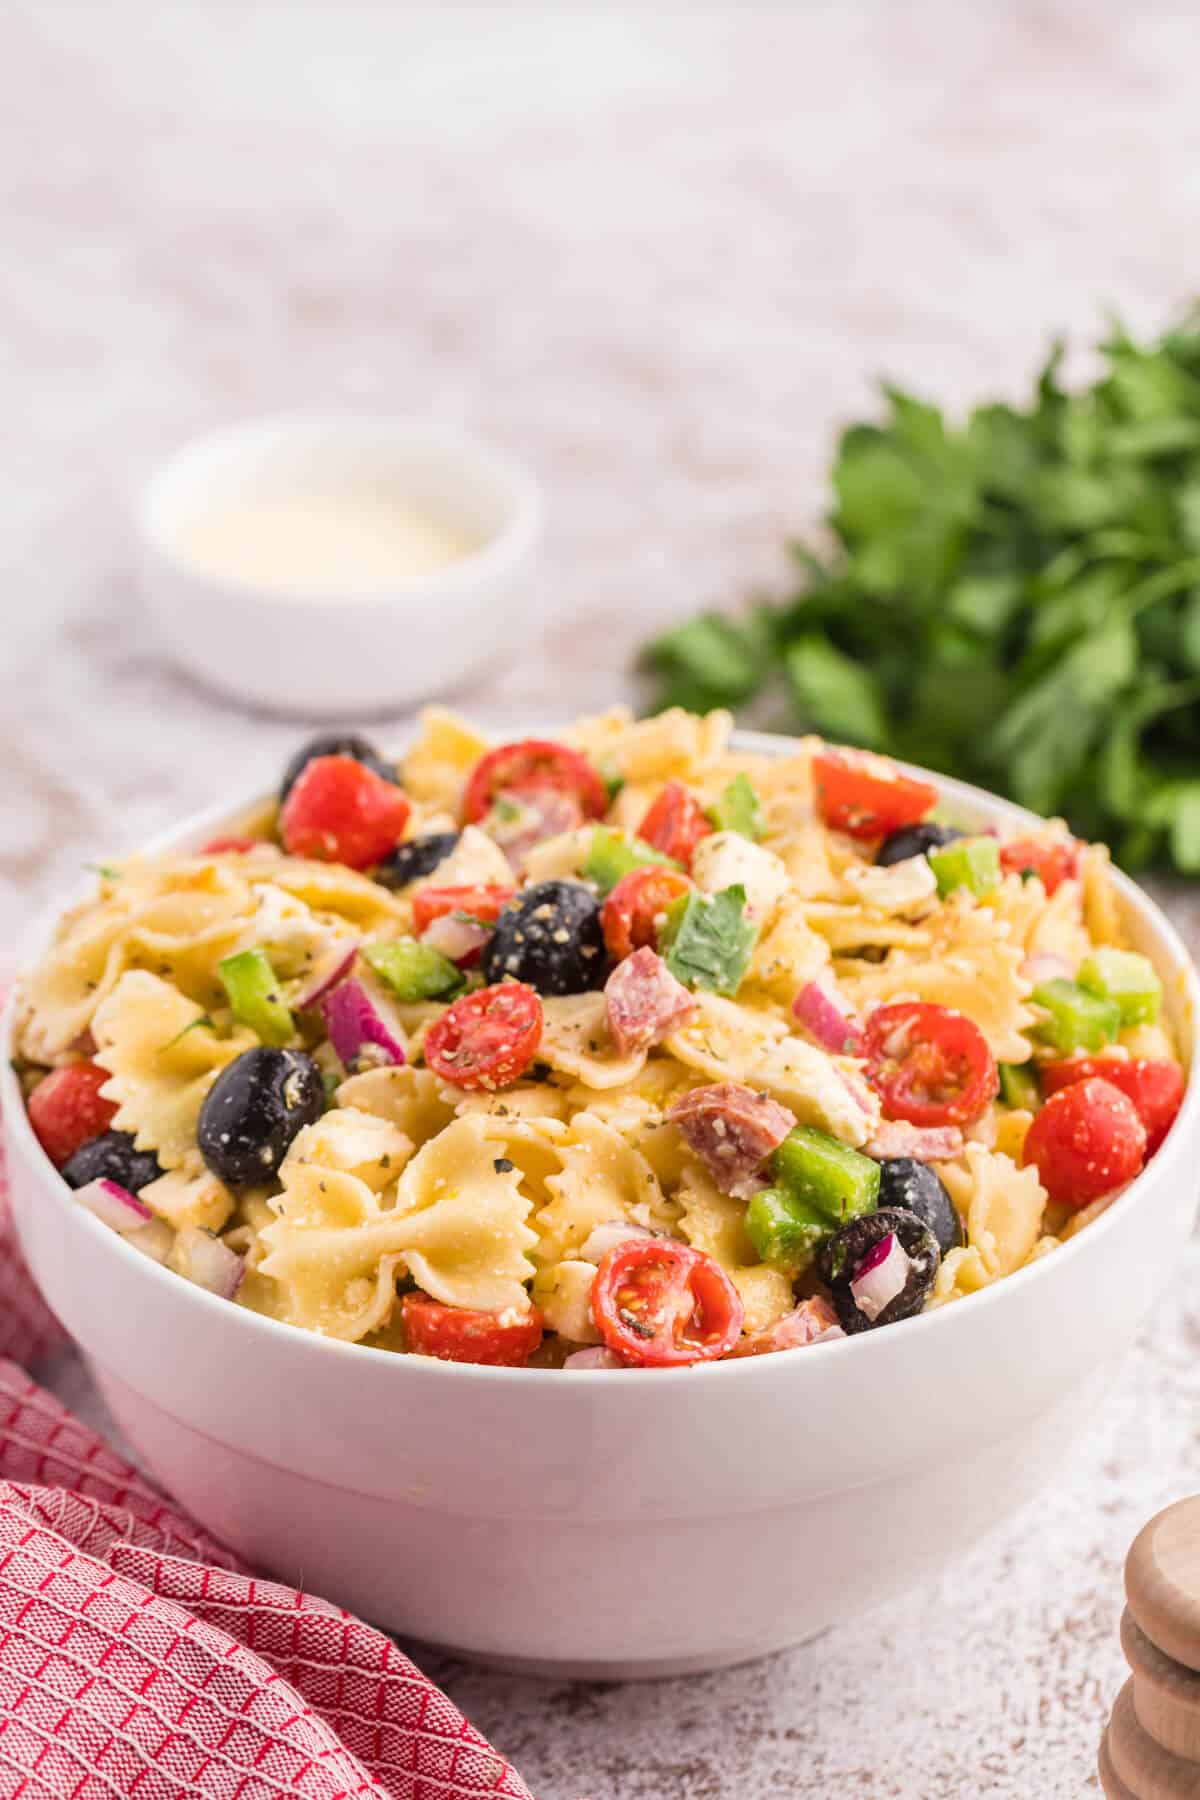 Italian pasta salad in a white bowl.